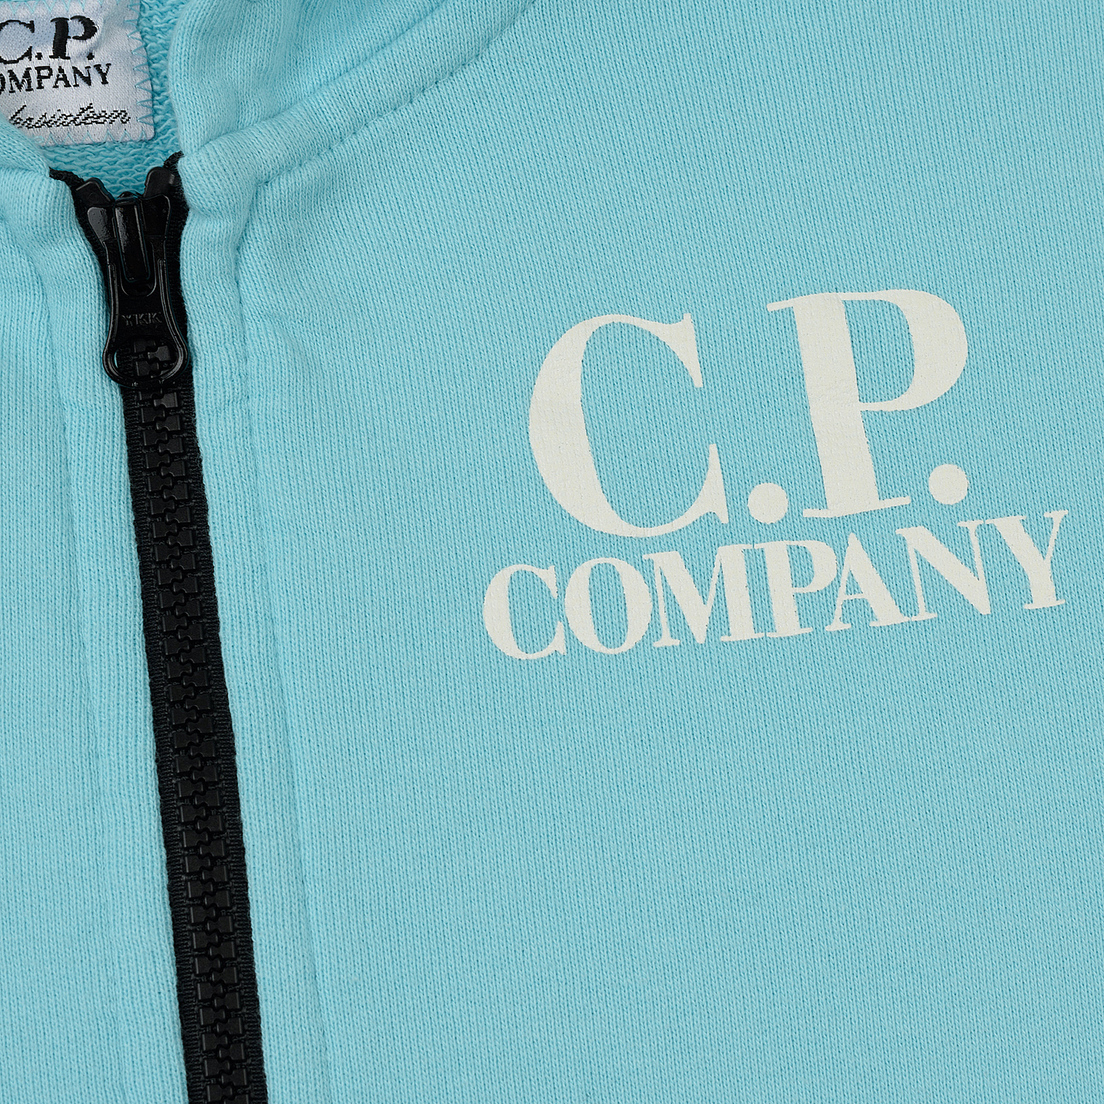 C.P. Company U16 Детская толстовка Fleece Hooded Open Logo Goggle